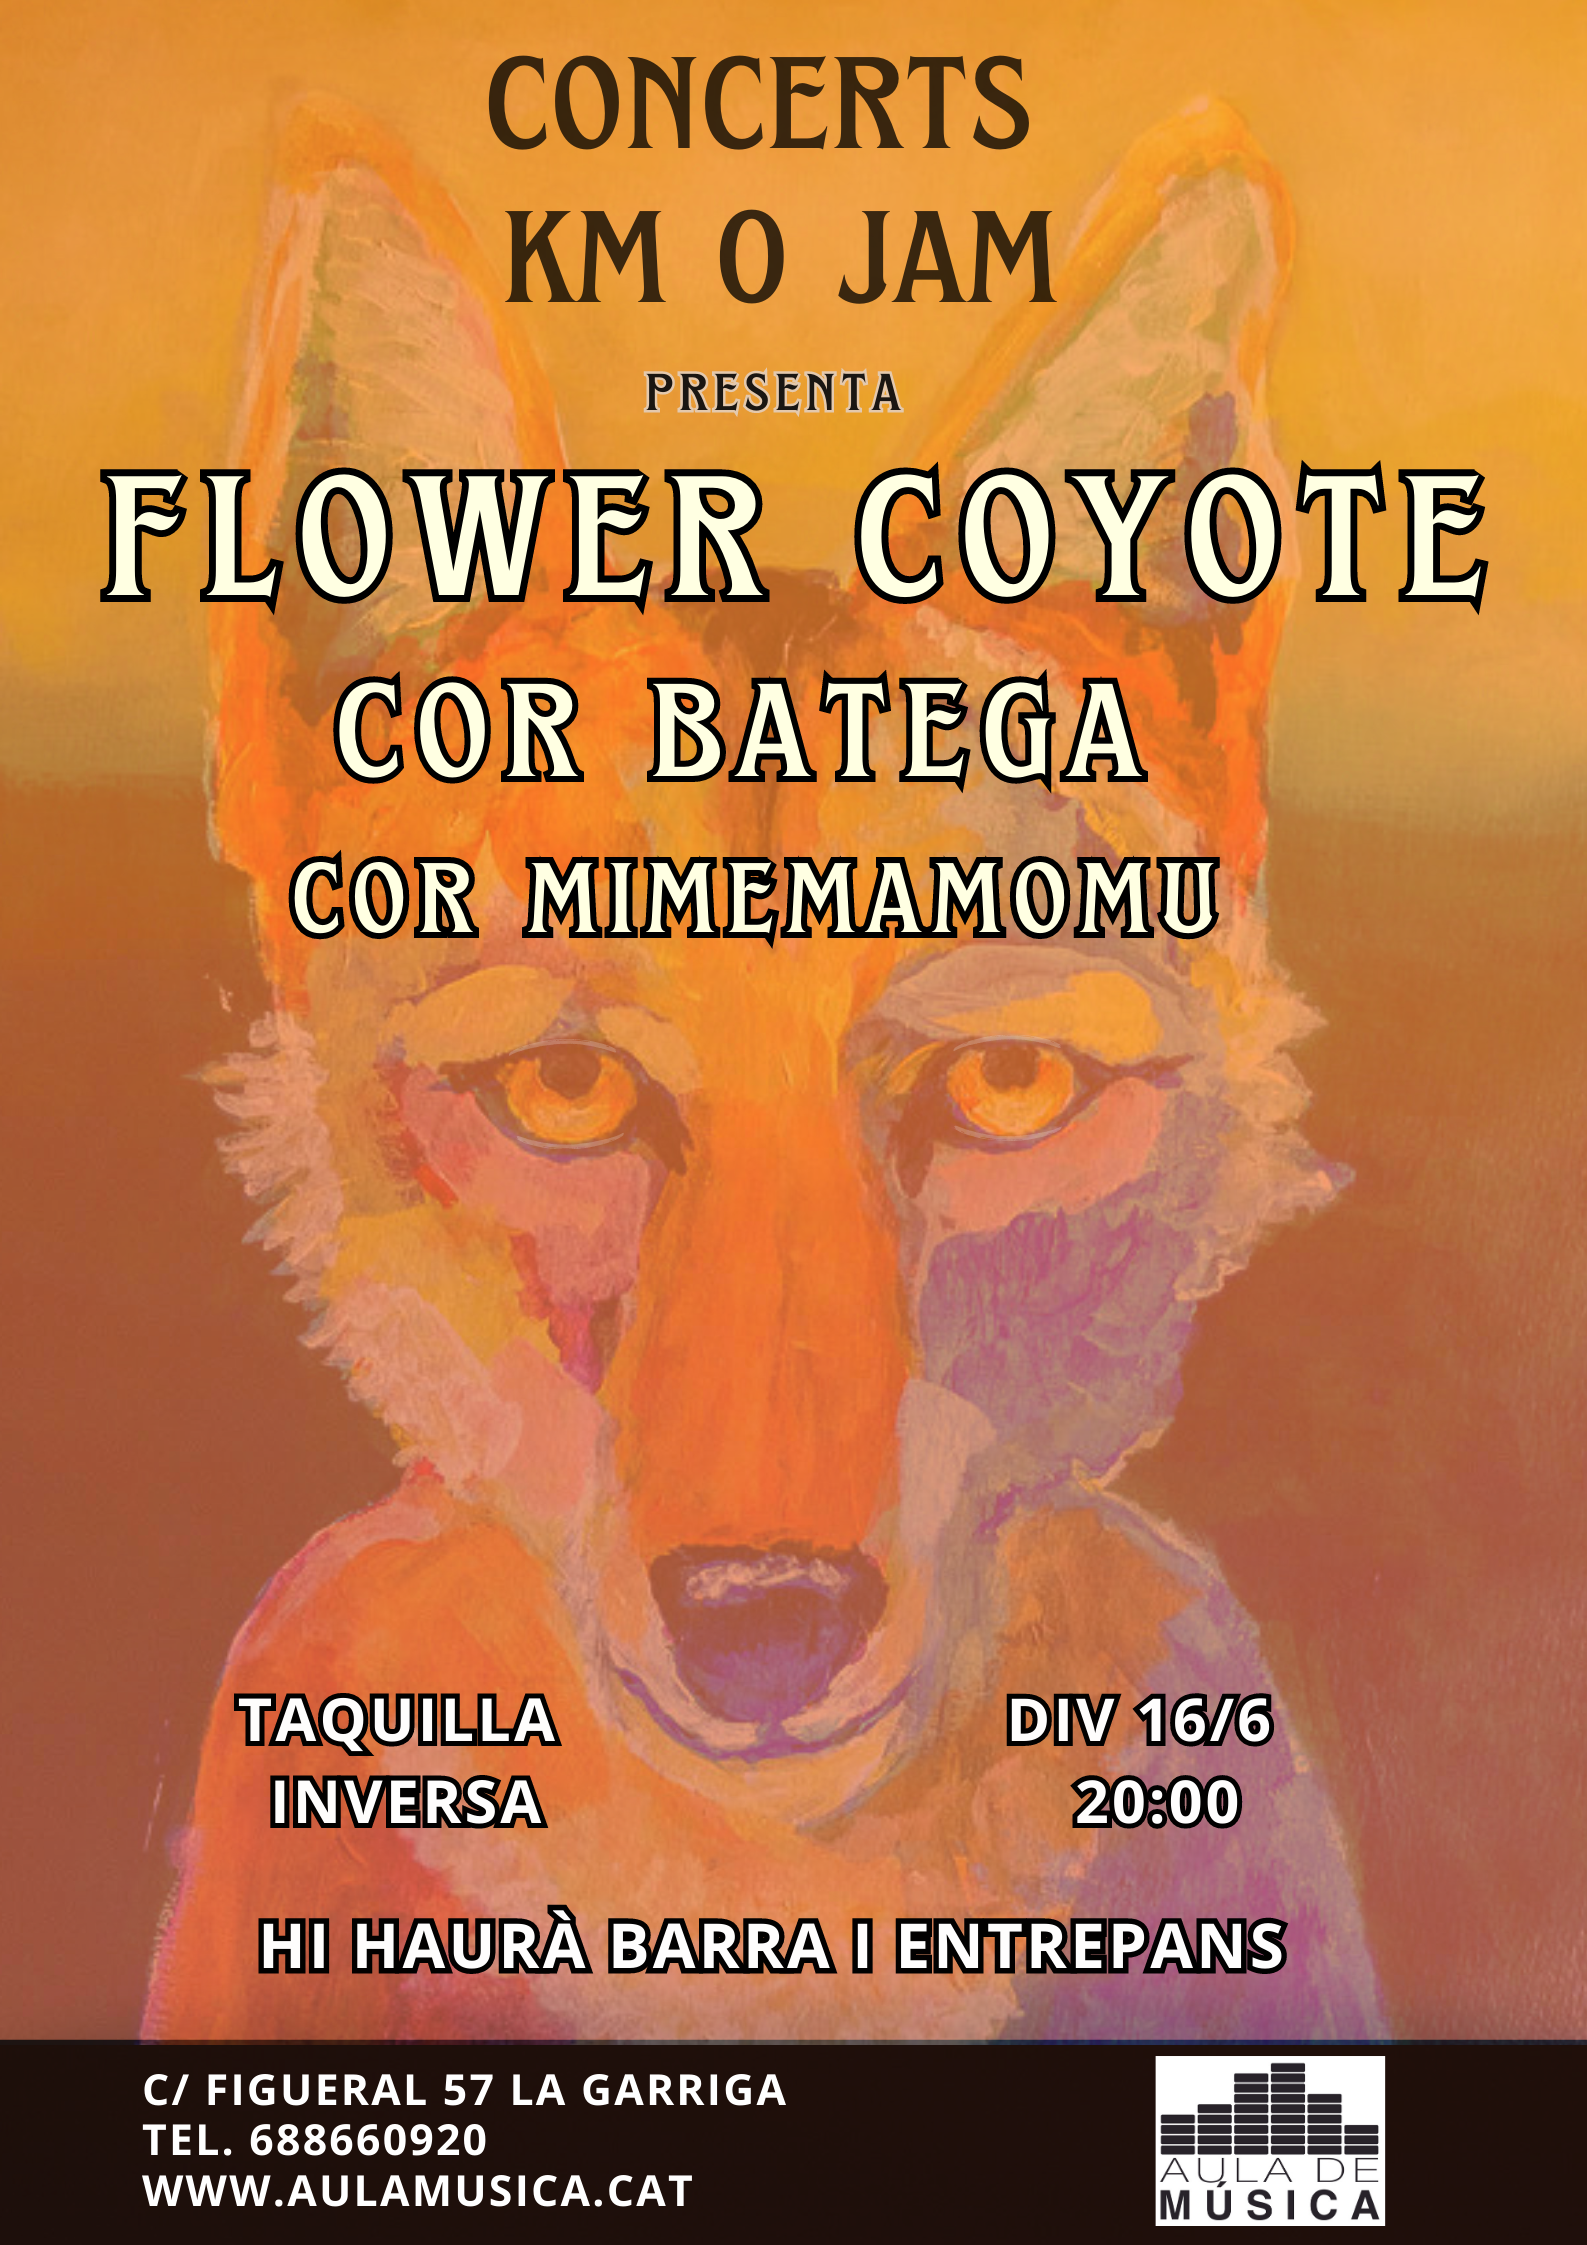 CONCERT FLOWER COYOTE COR BATEGA